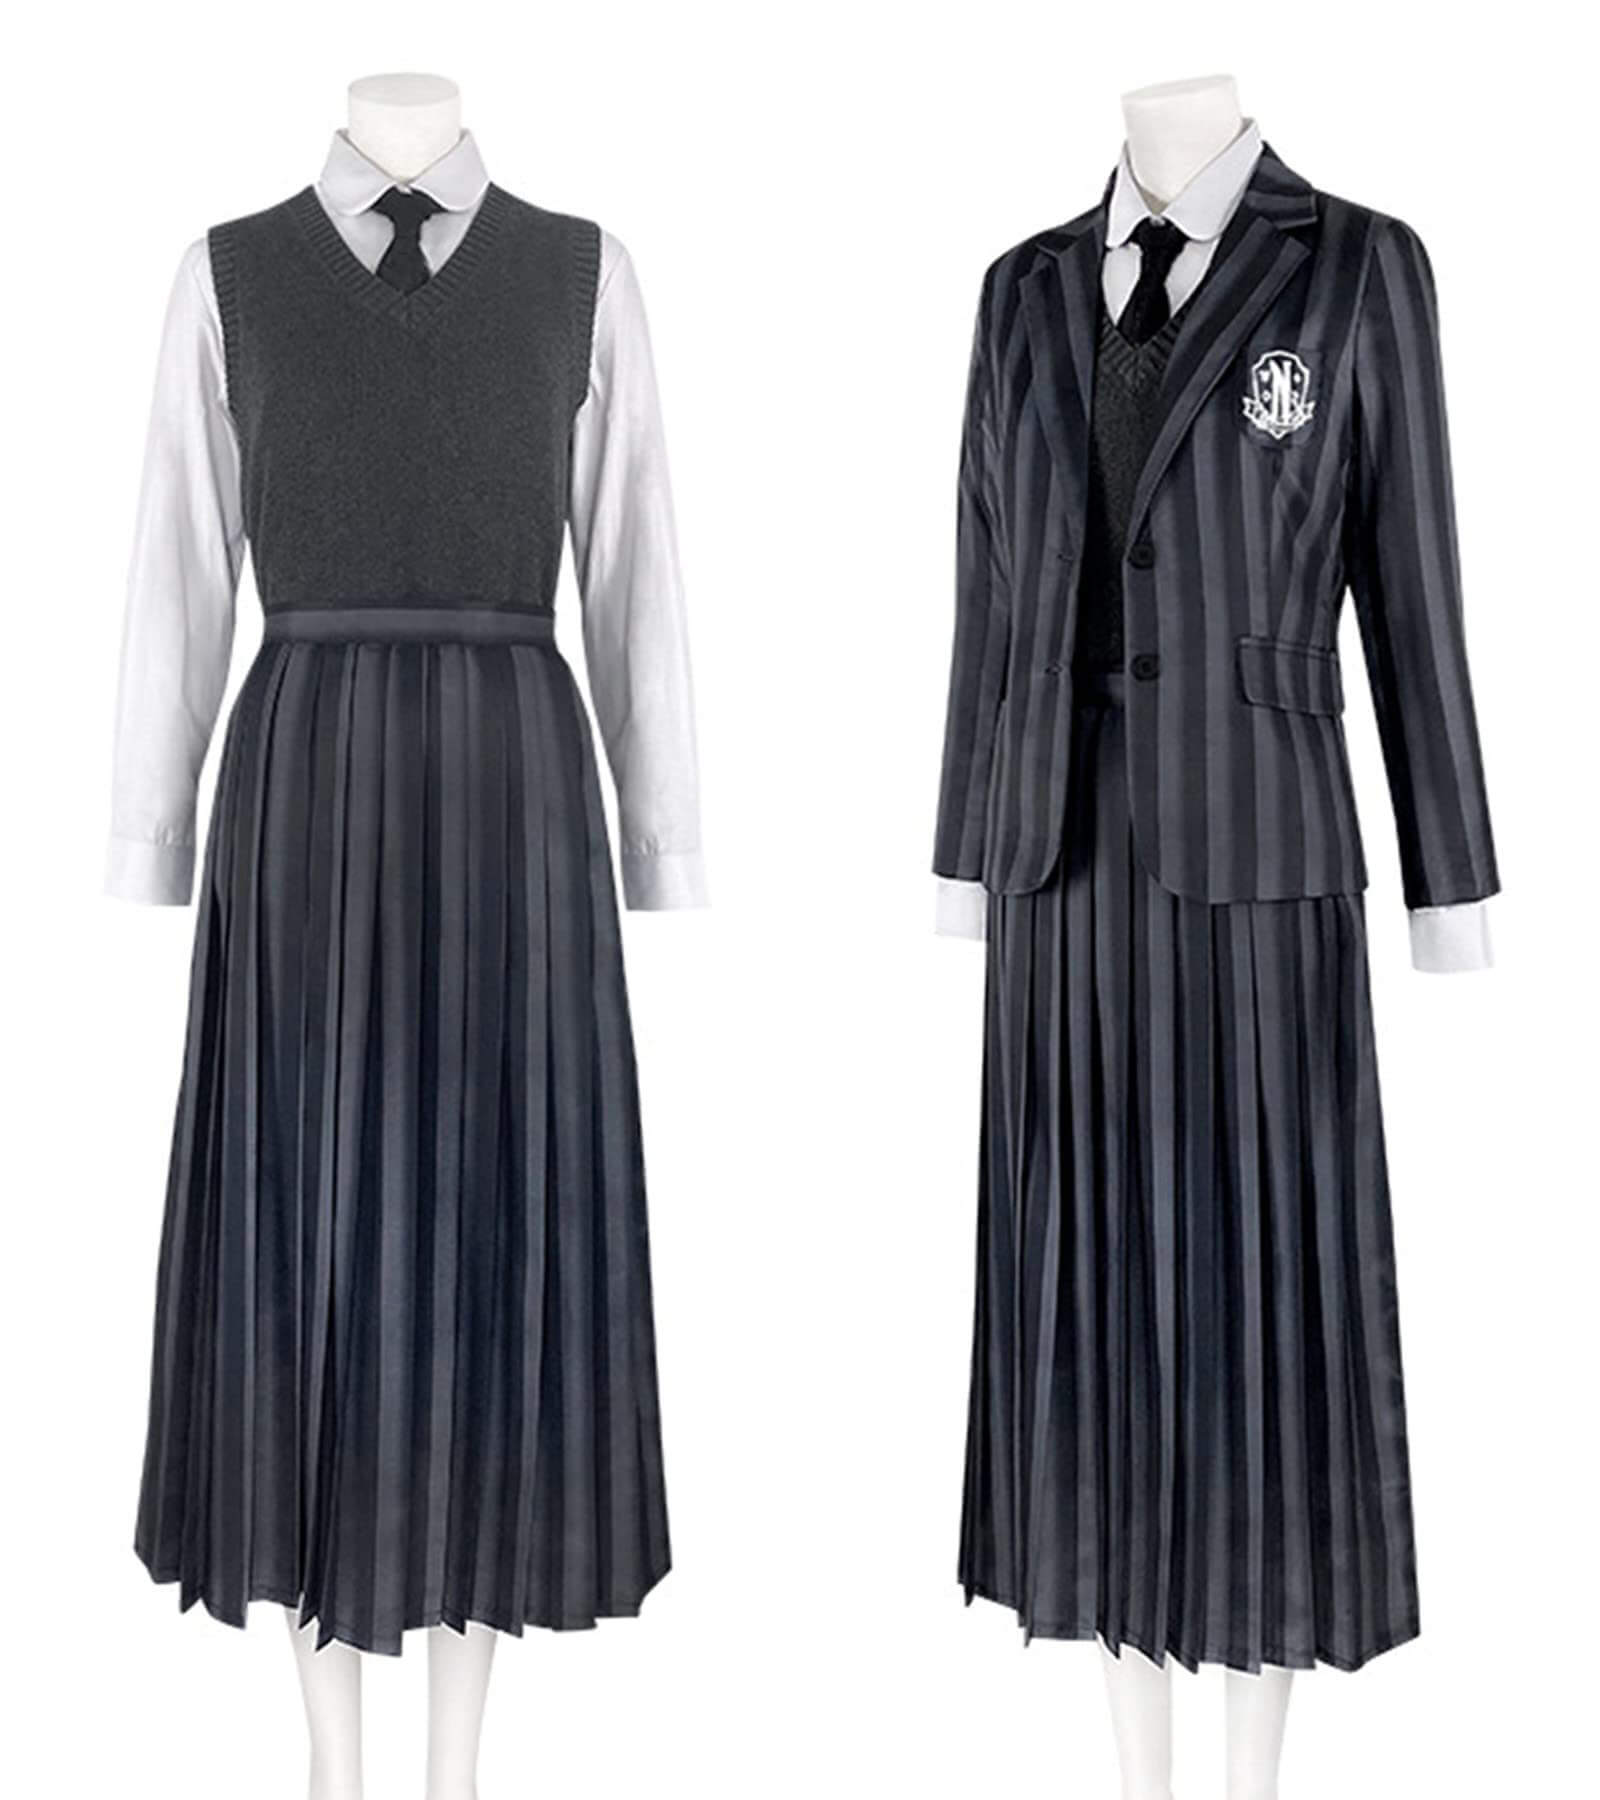 Wednesday Addams School Uniform Nevermore School Dress 5pcs Suit Wedne ...